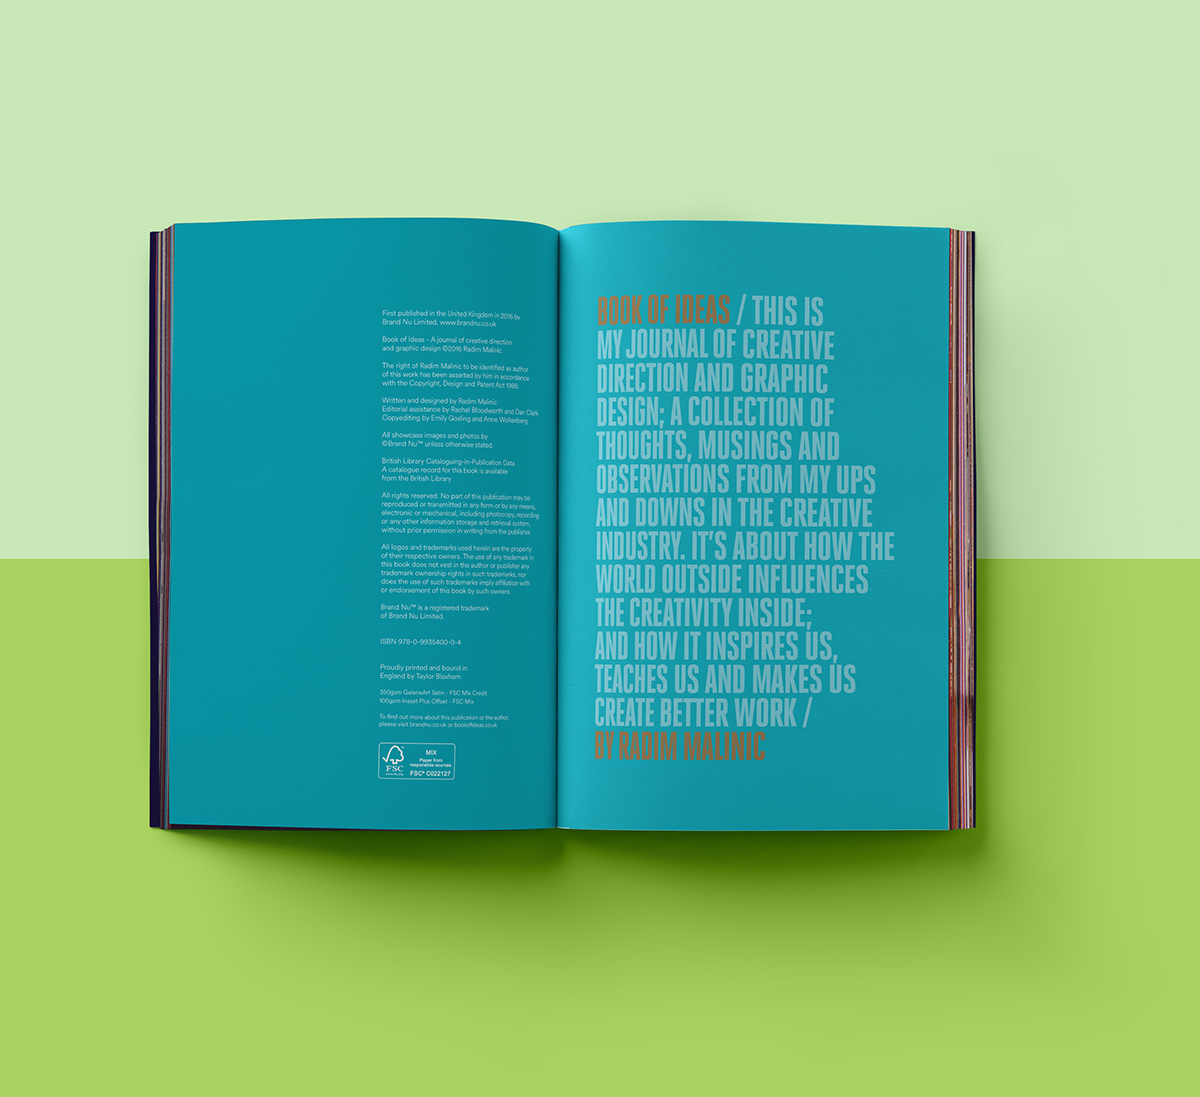 book book design radim malinic brand nu